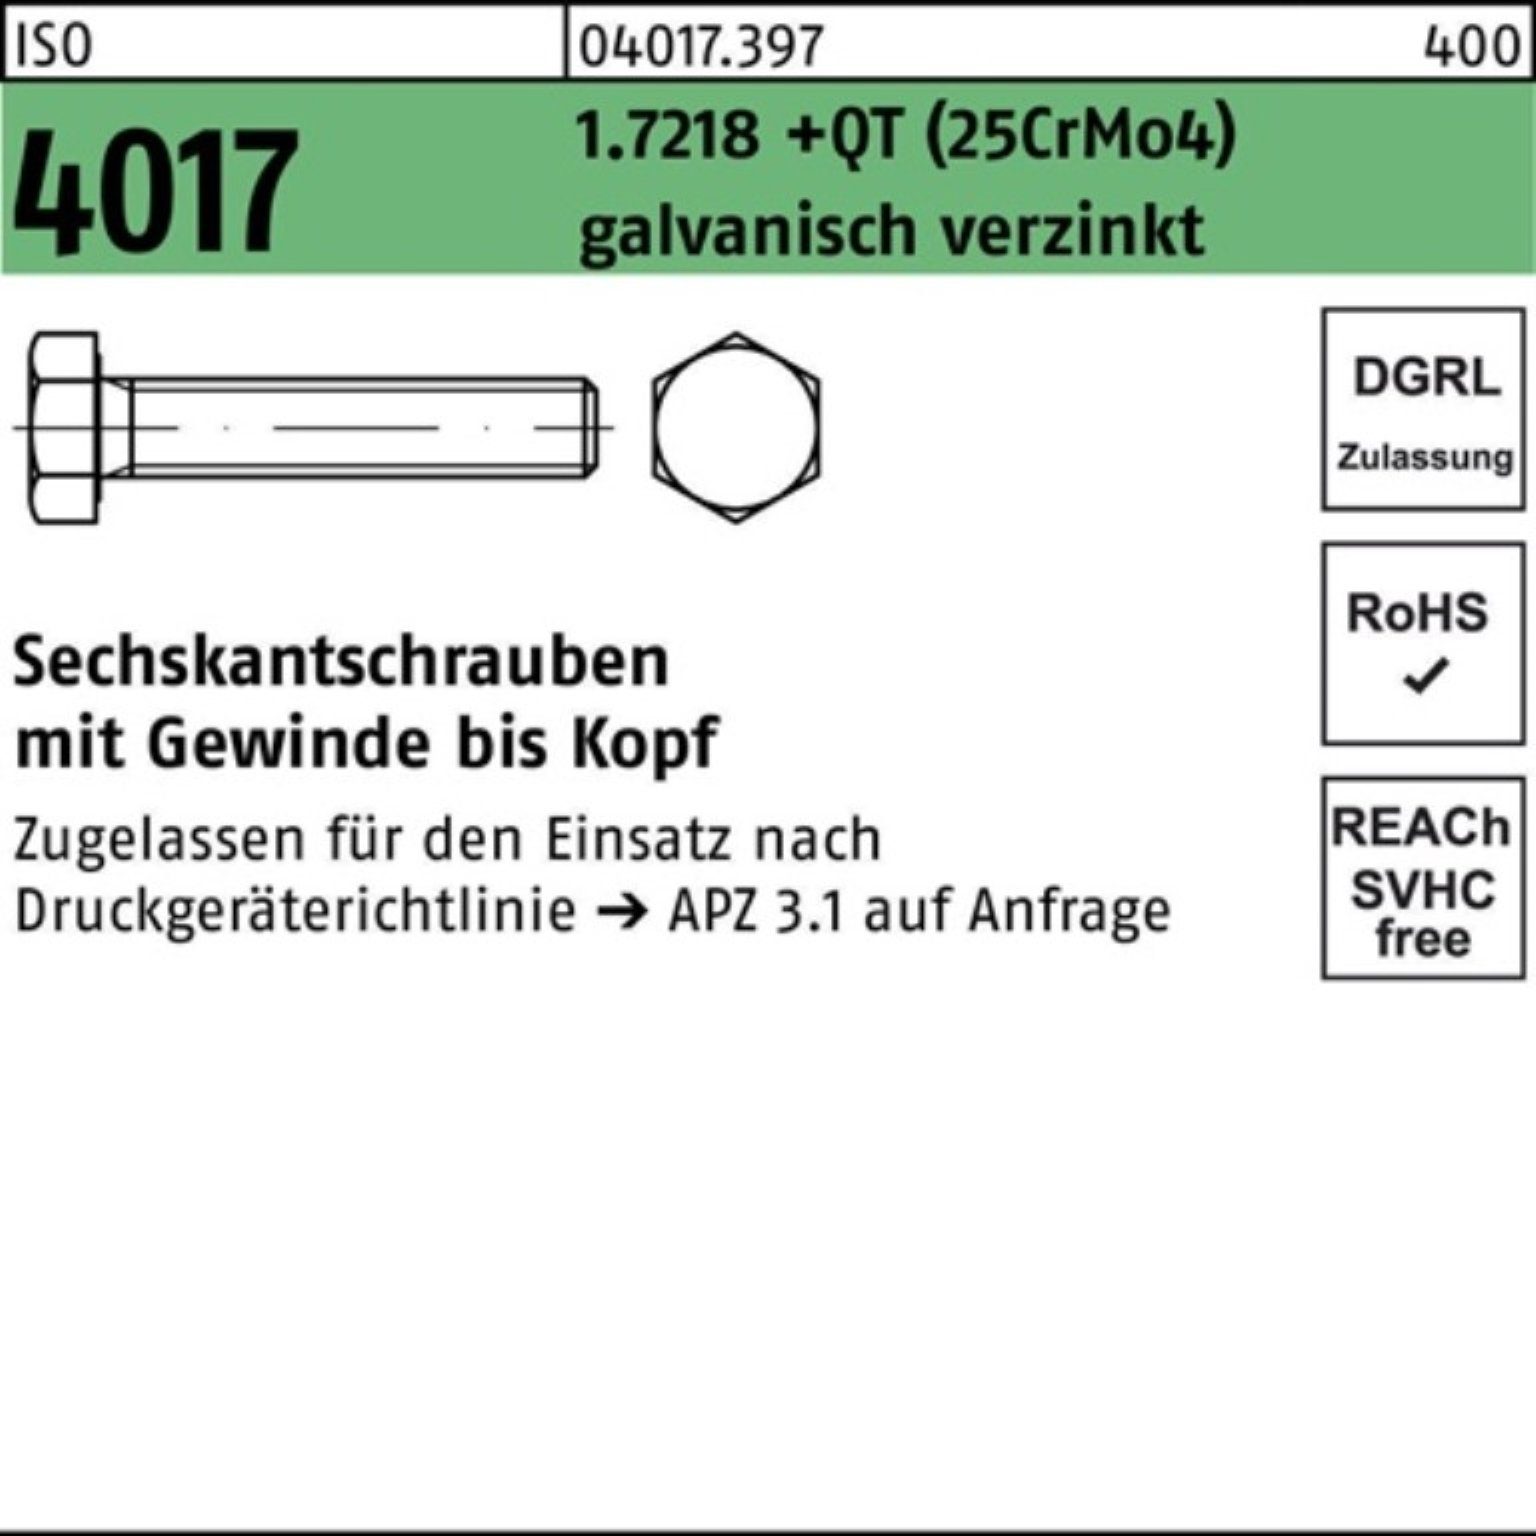 Sechskantschraube 100er 1.7218 VG 4017 Bufab Pack Sechskantschraube +QT (25CrMo4) ISO M24x90 g